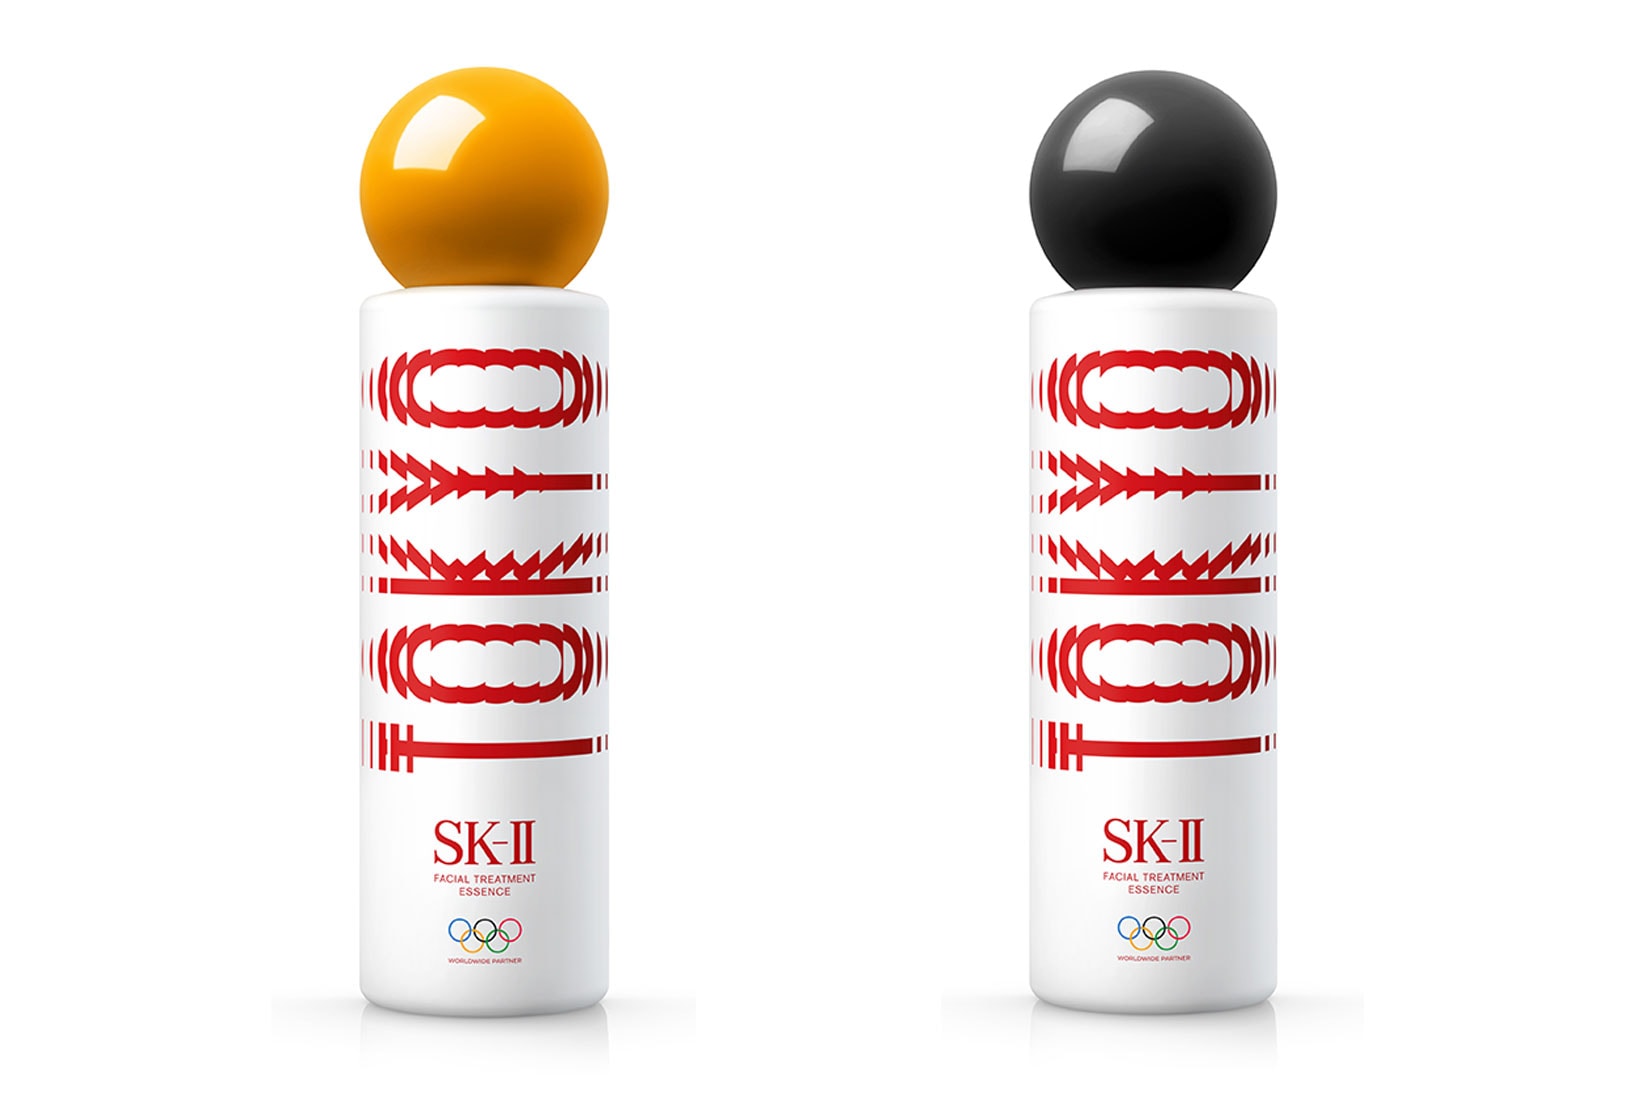 ski-ii fairy water facial treatment essence tokyo 2020 olympics limited edition bottle yellow black